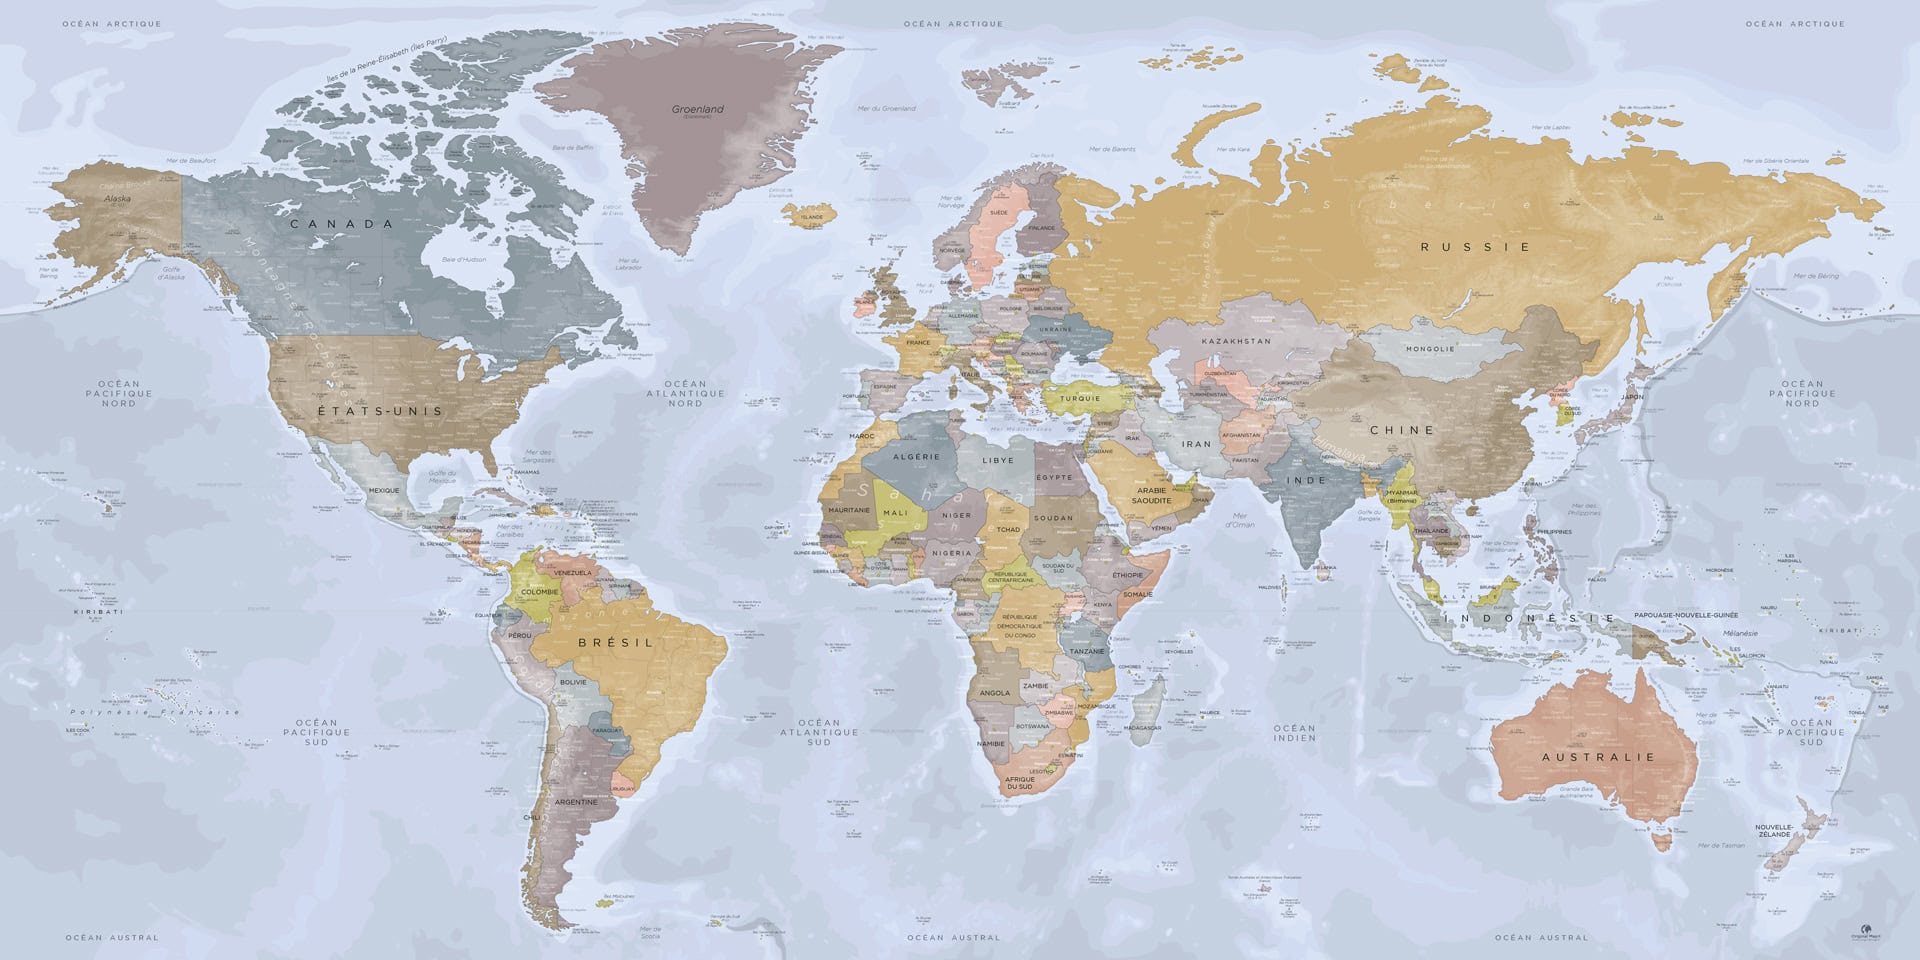 https://originalmap.fr/wp-content/uploads/2017/09/Carte-Monde_Mappemonde_Planisphere_Carte-Mondiale-2.jpg